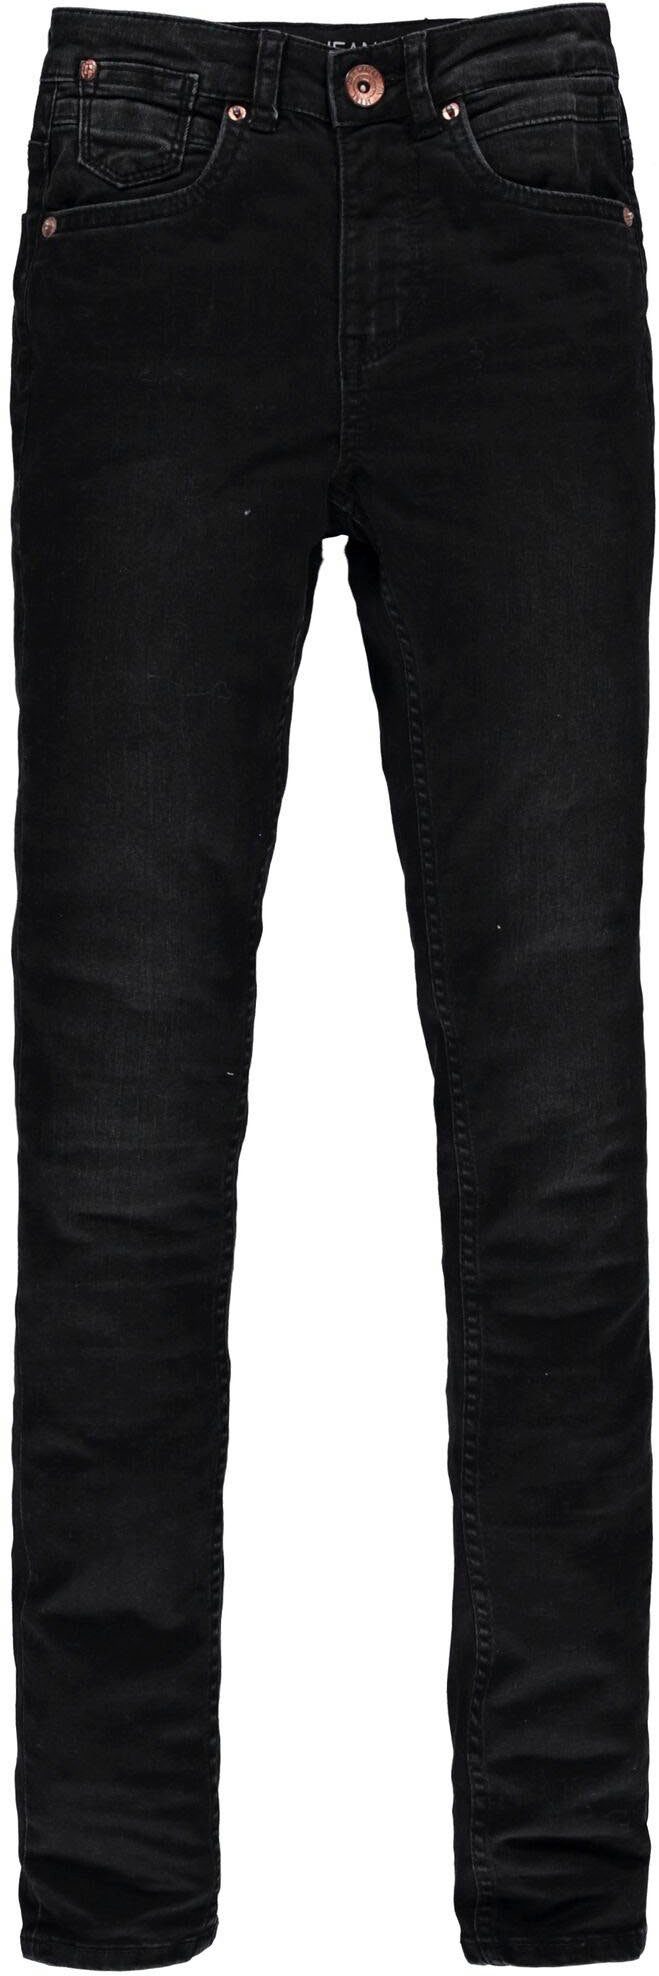 RIANNA SUPERSLIM Garcia Stretch-Jeans 570